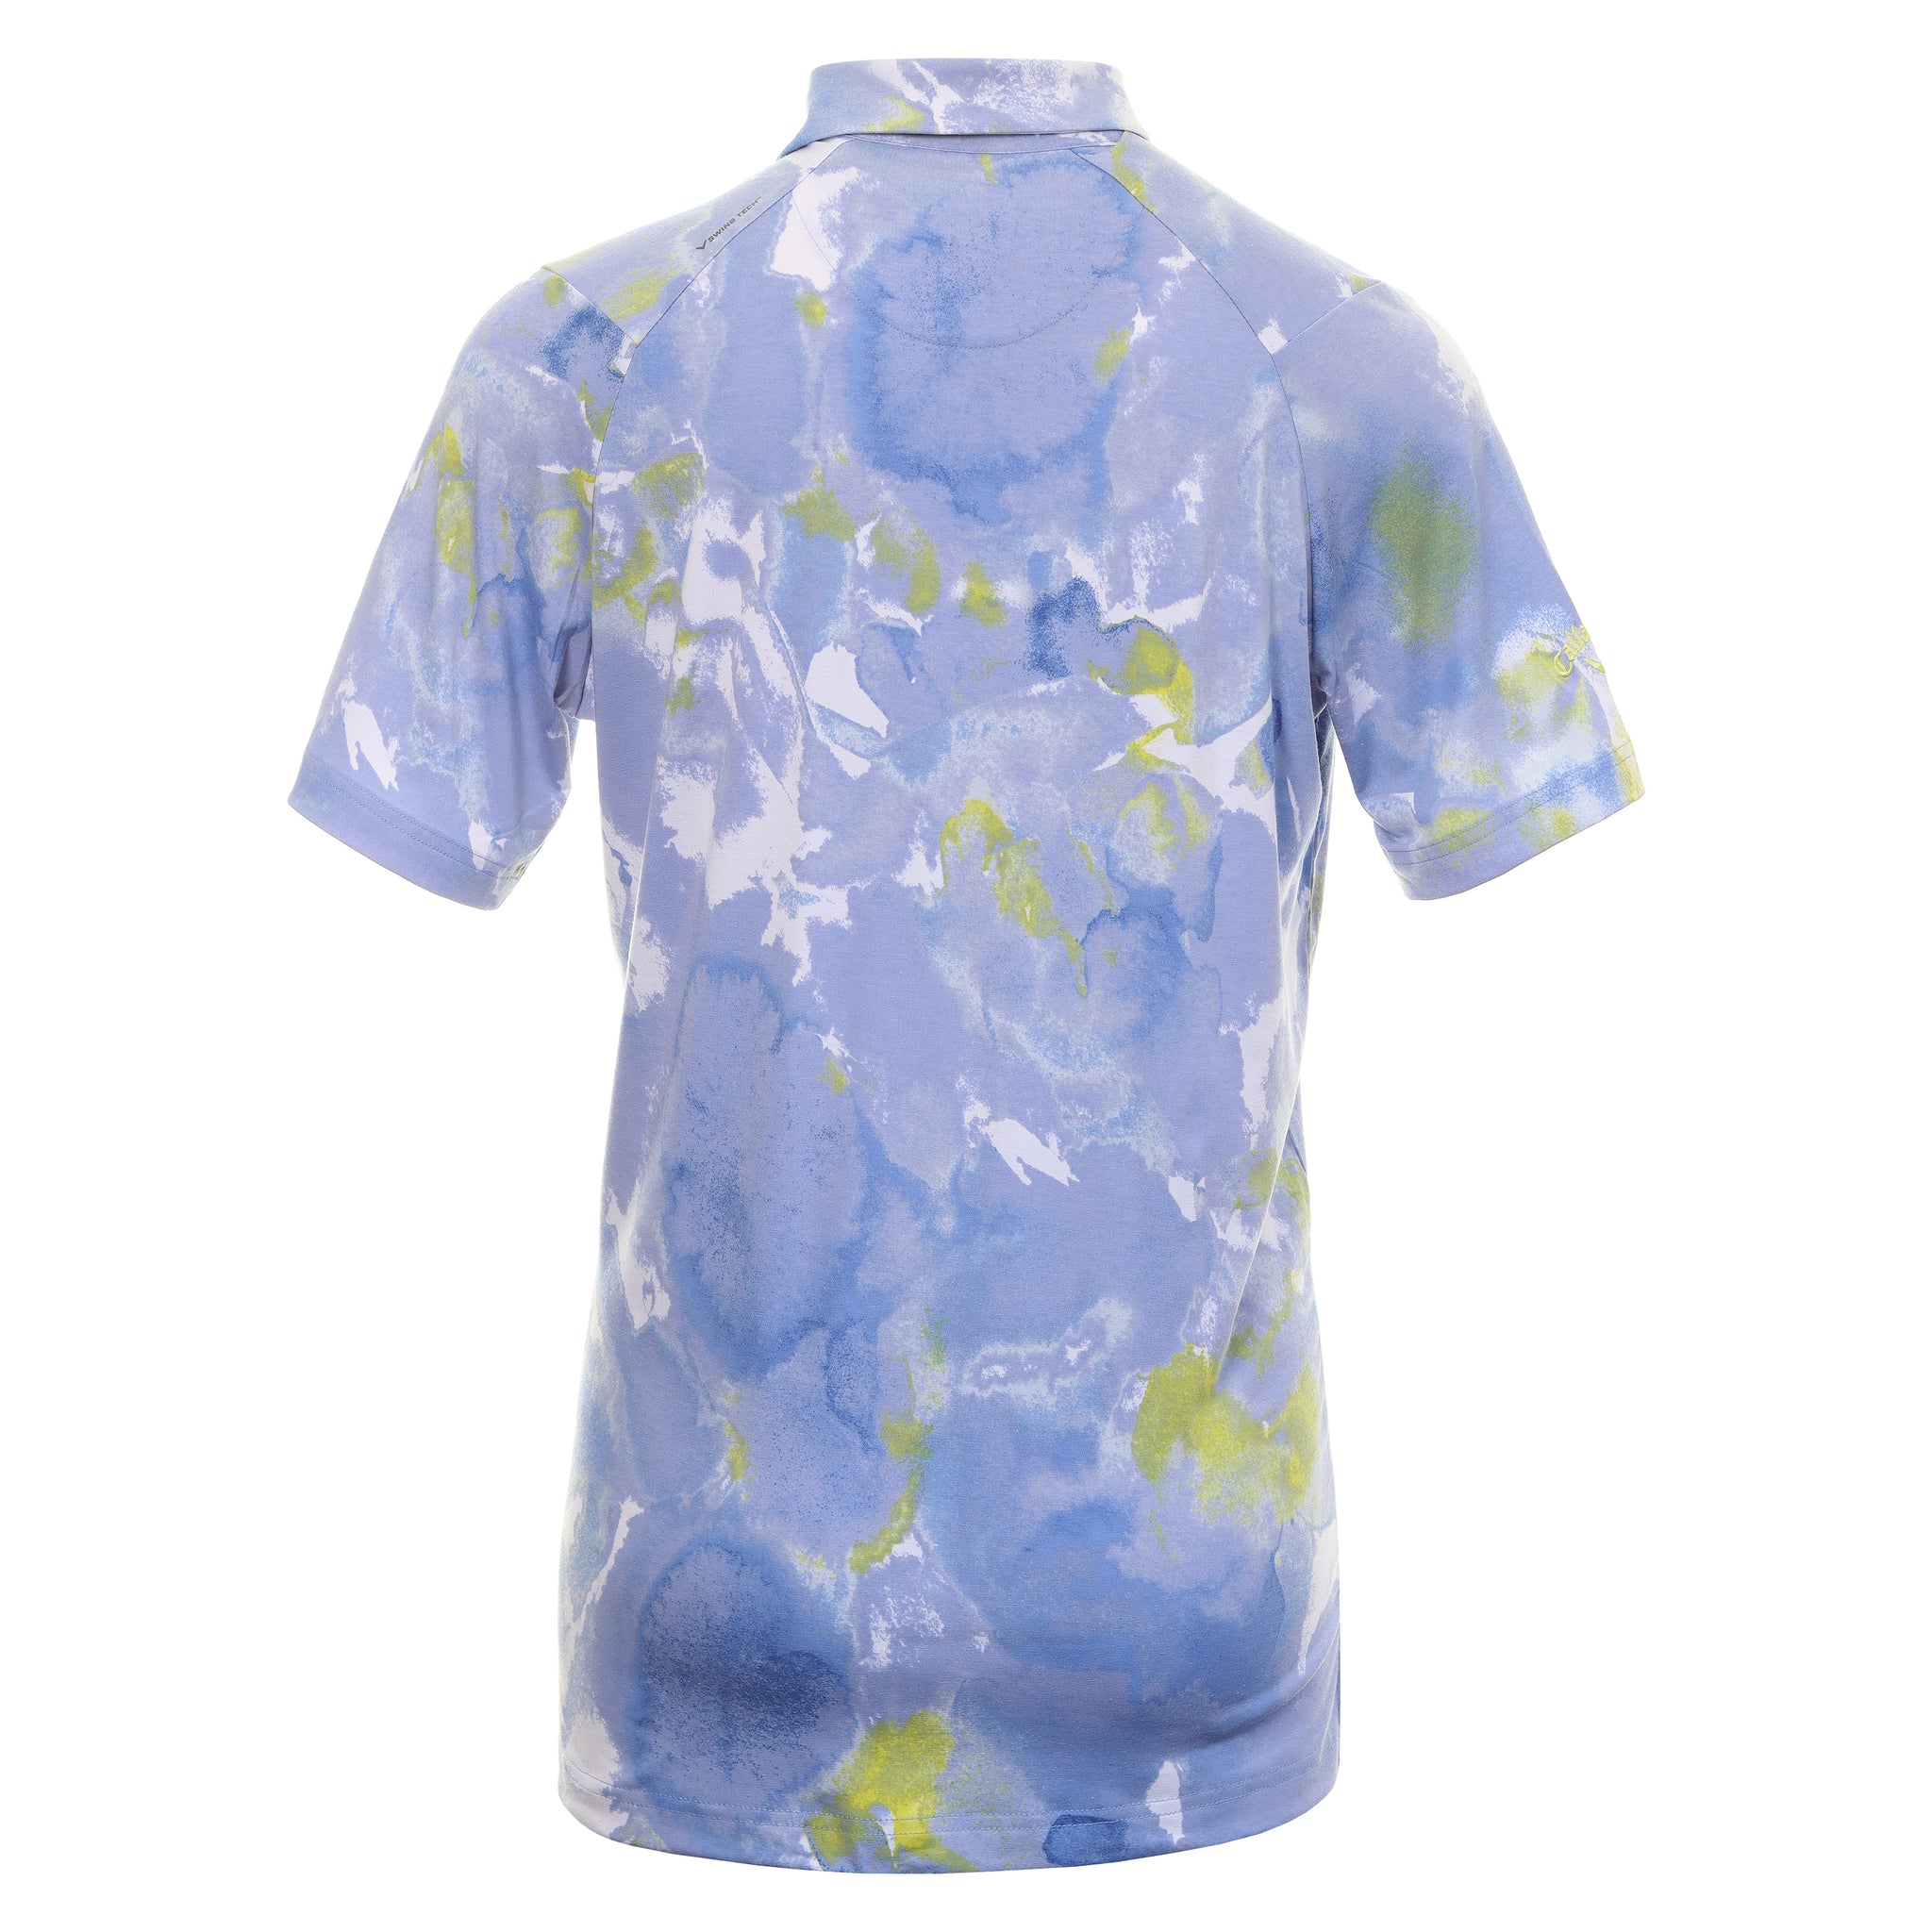 Callaway Golf Thermal Dye Print Shirt